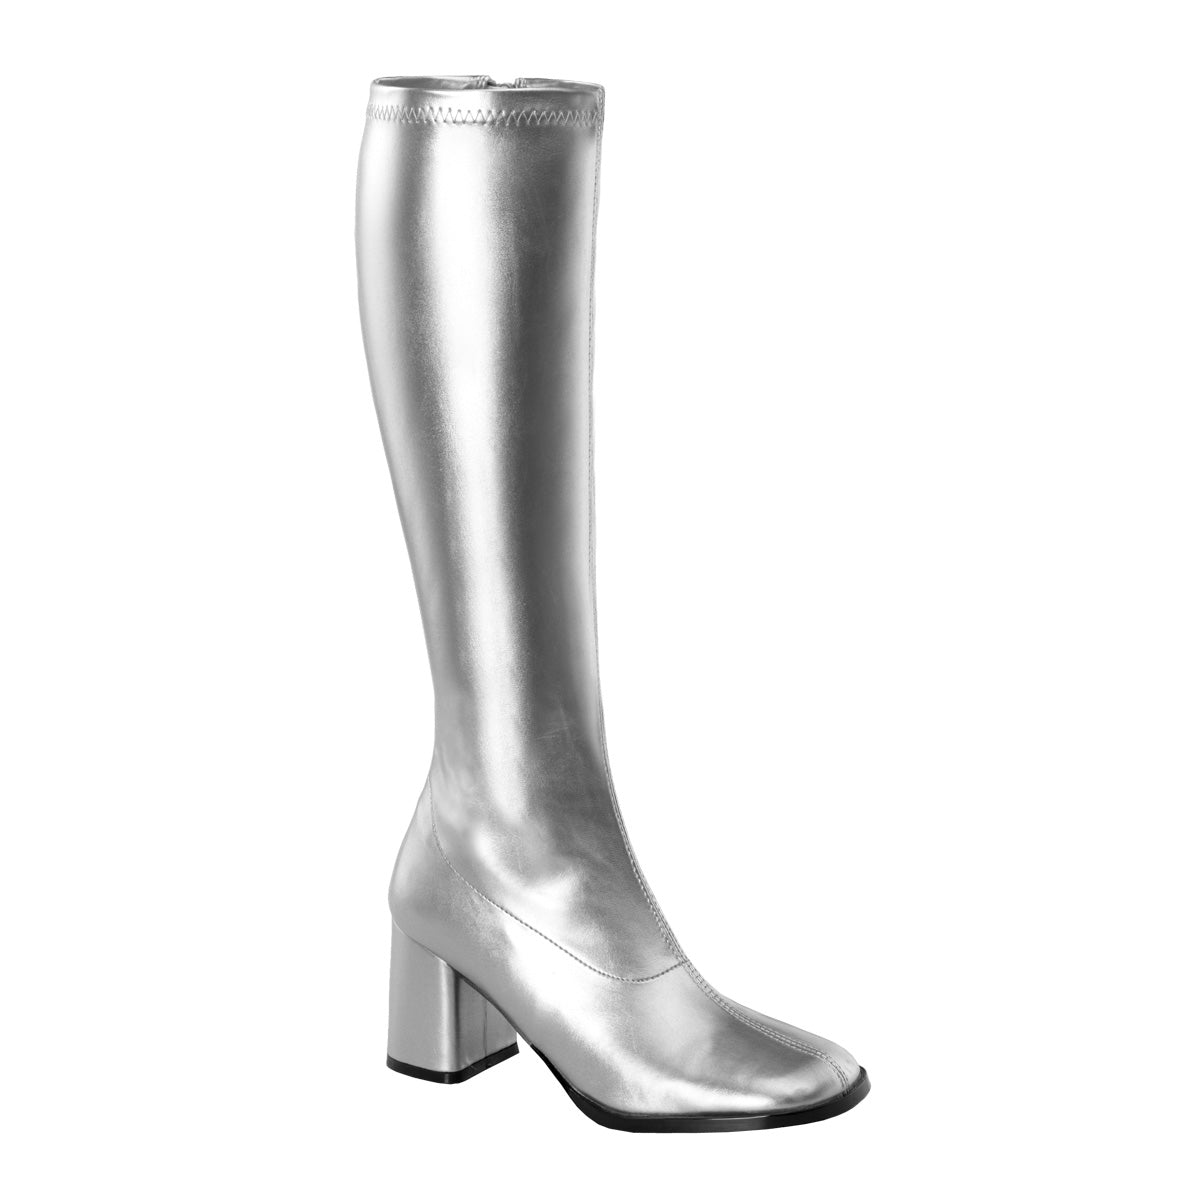 GOGO-300 Pleasers Funtasma 3 Inch Heel Silver Women's Boots